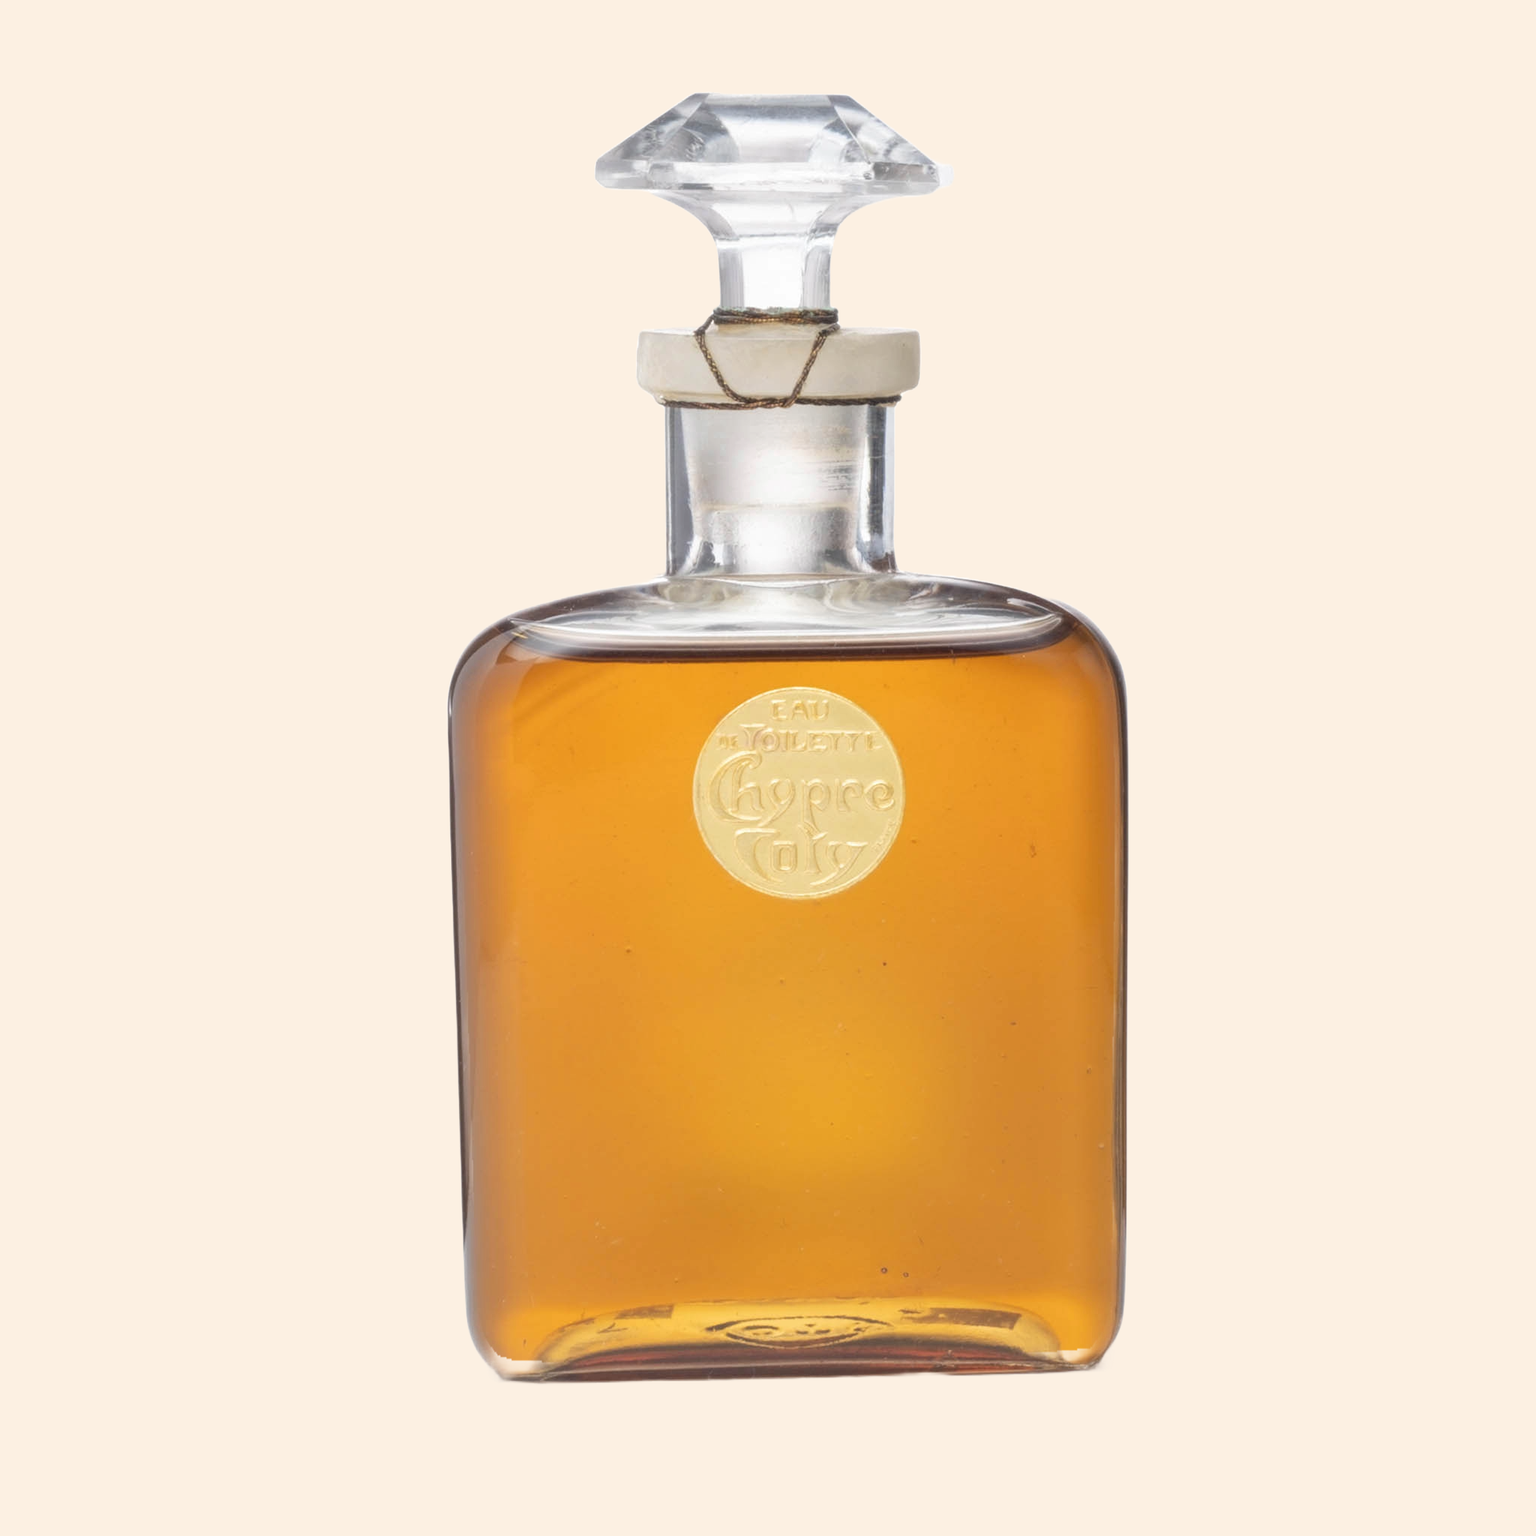 Chypre Coty perfume bottle